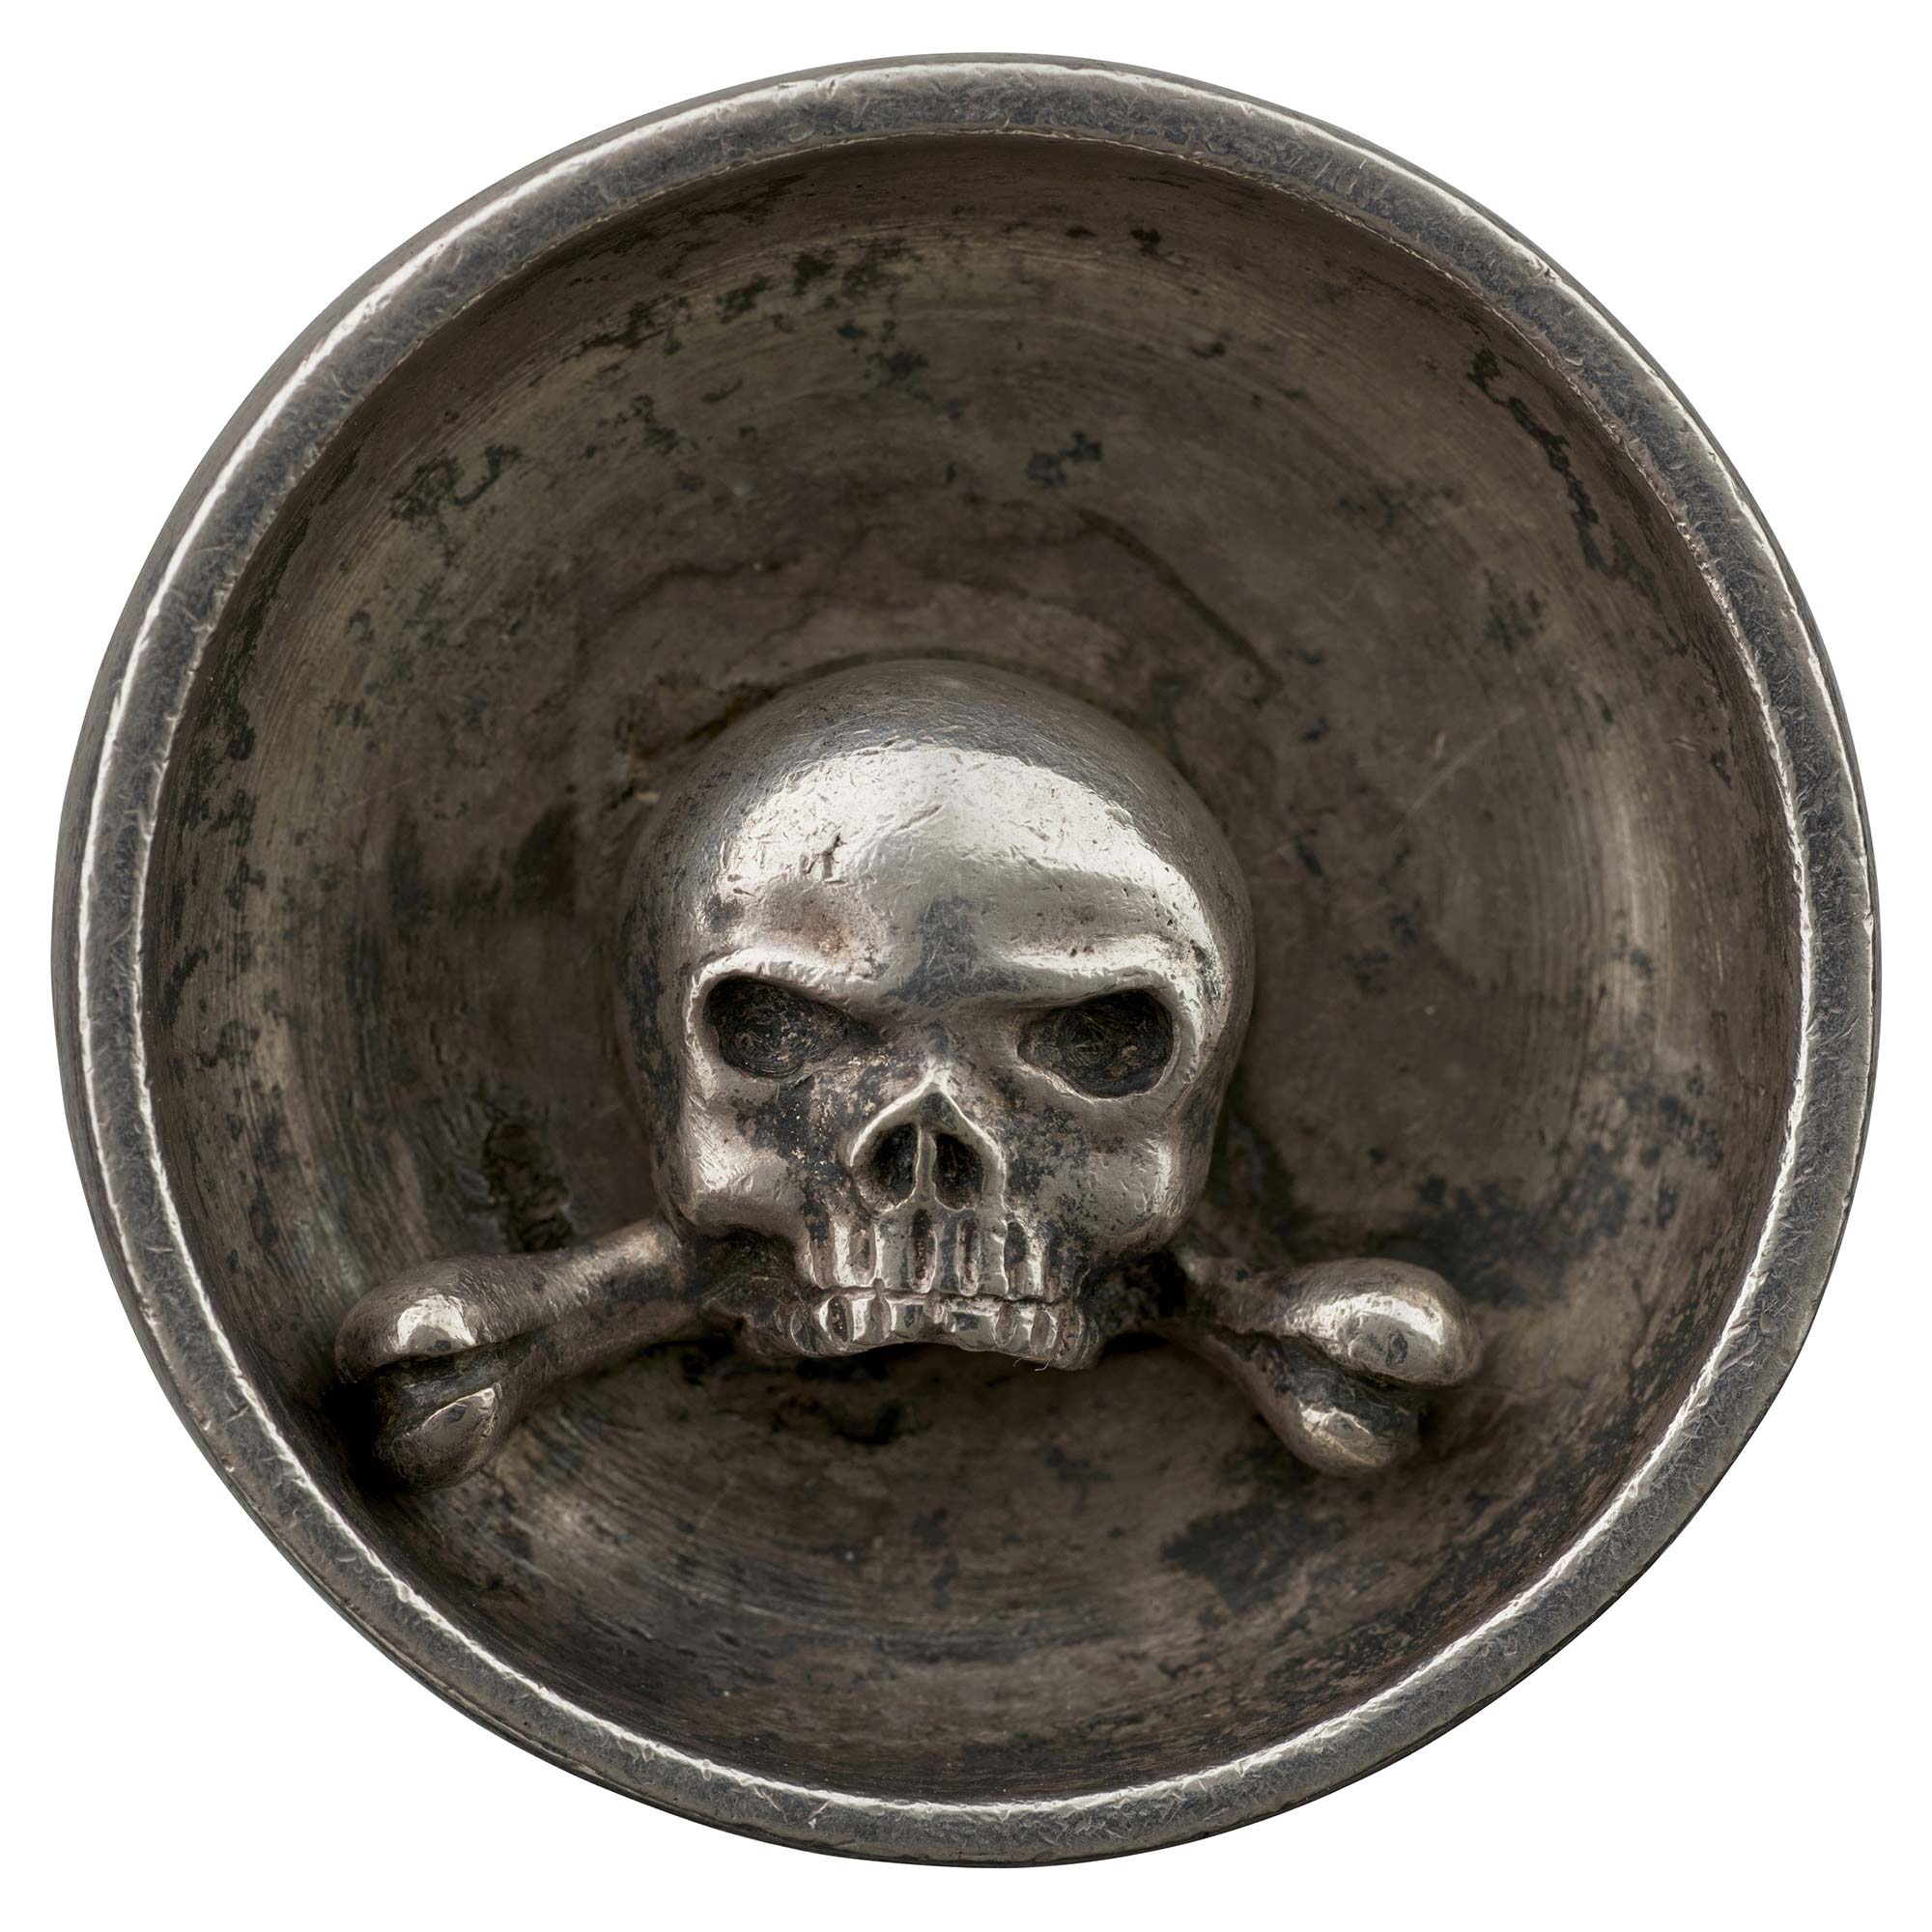 Silver medal depicting a skull and bones